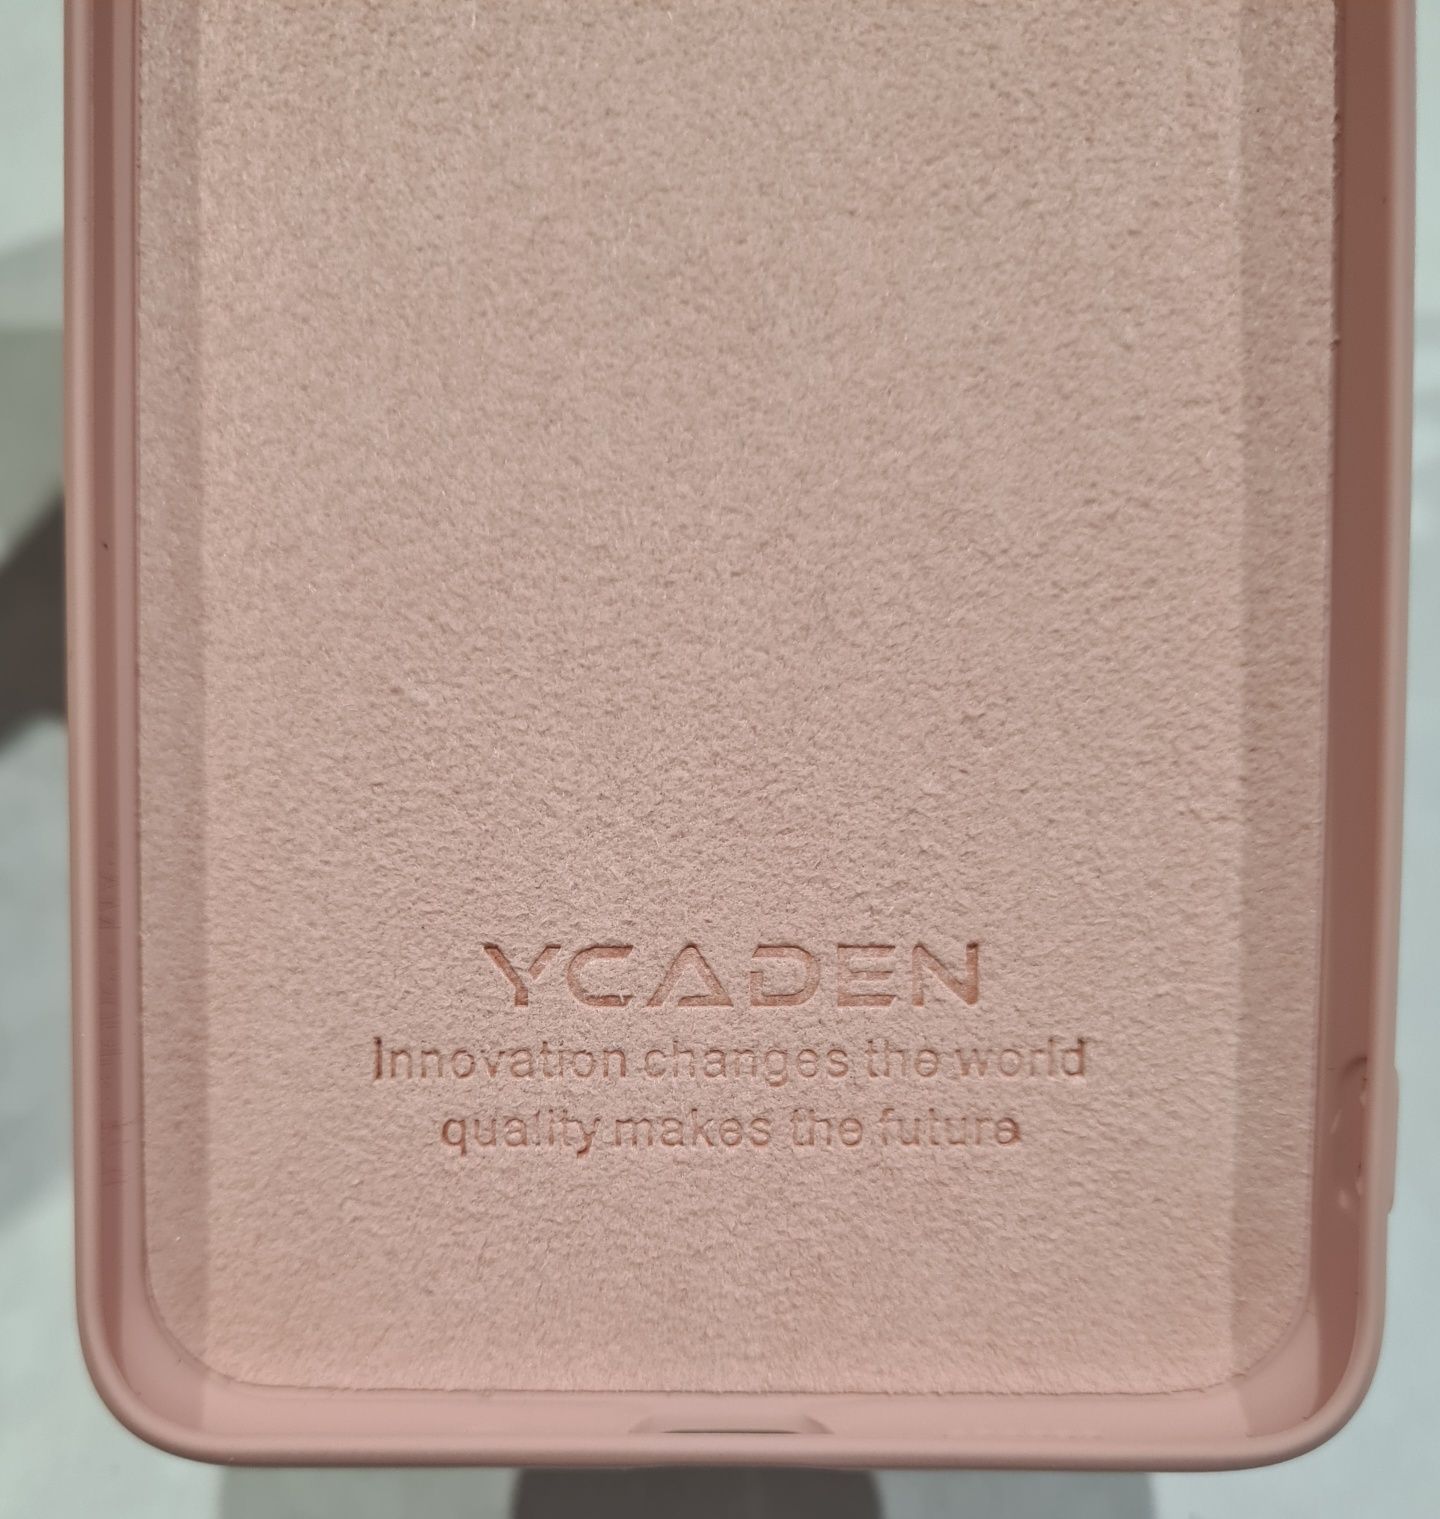 Etui soft silicone case Samsung Galaxy S 20 plus + pudrowy róż różowy